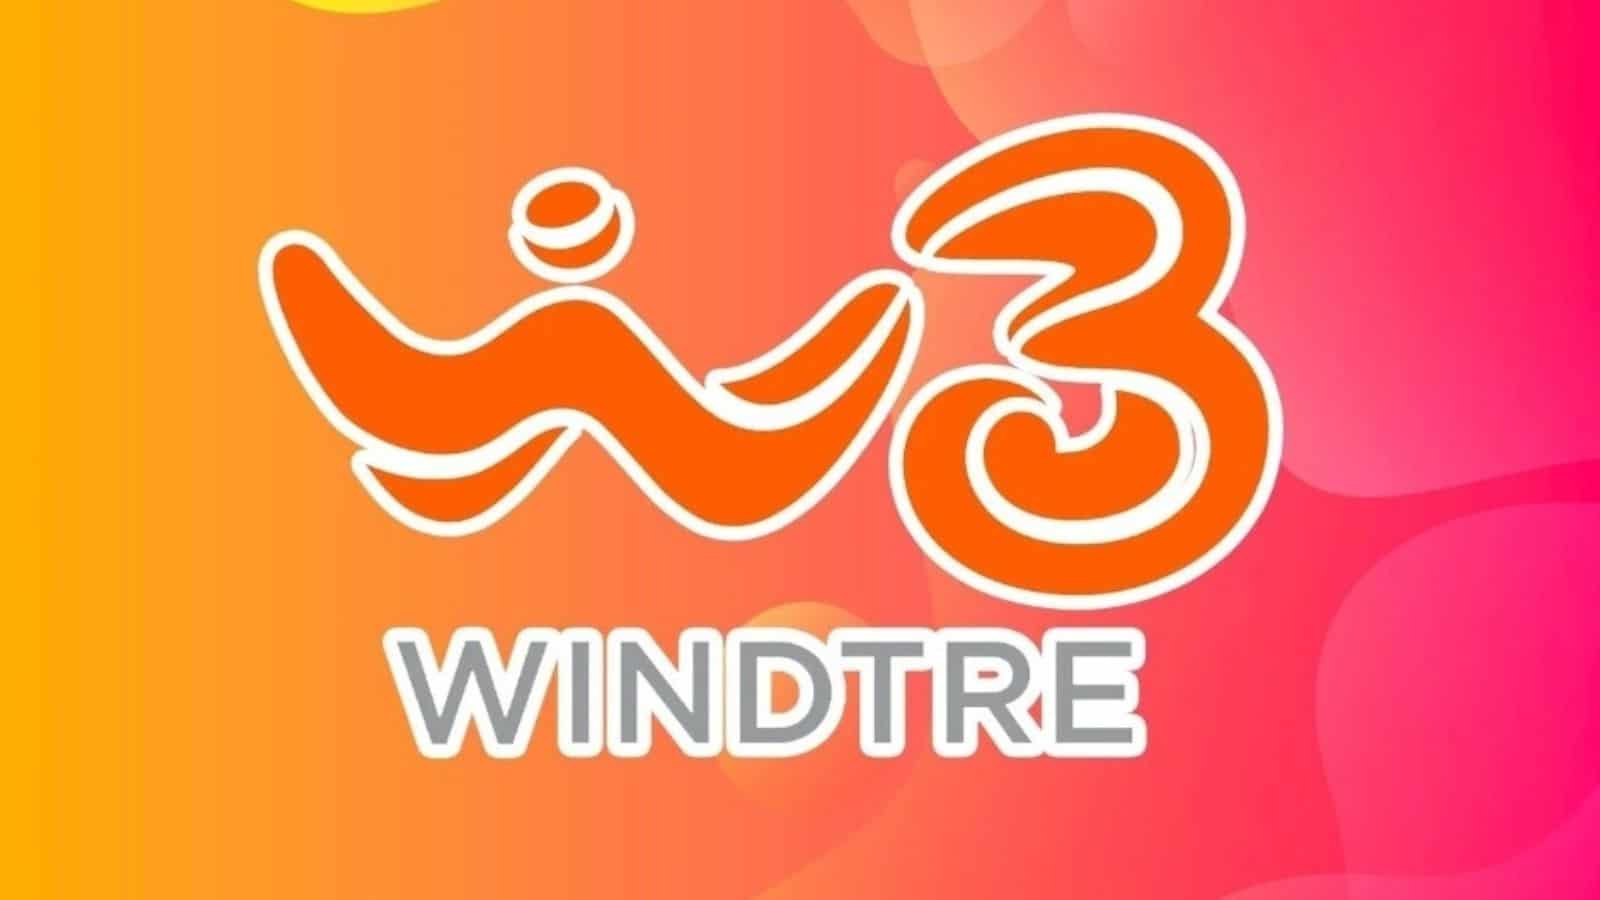 WindTre Promo seconda sim